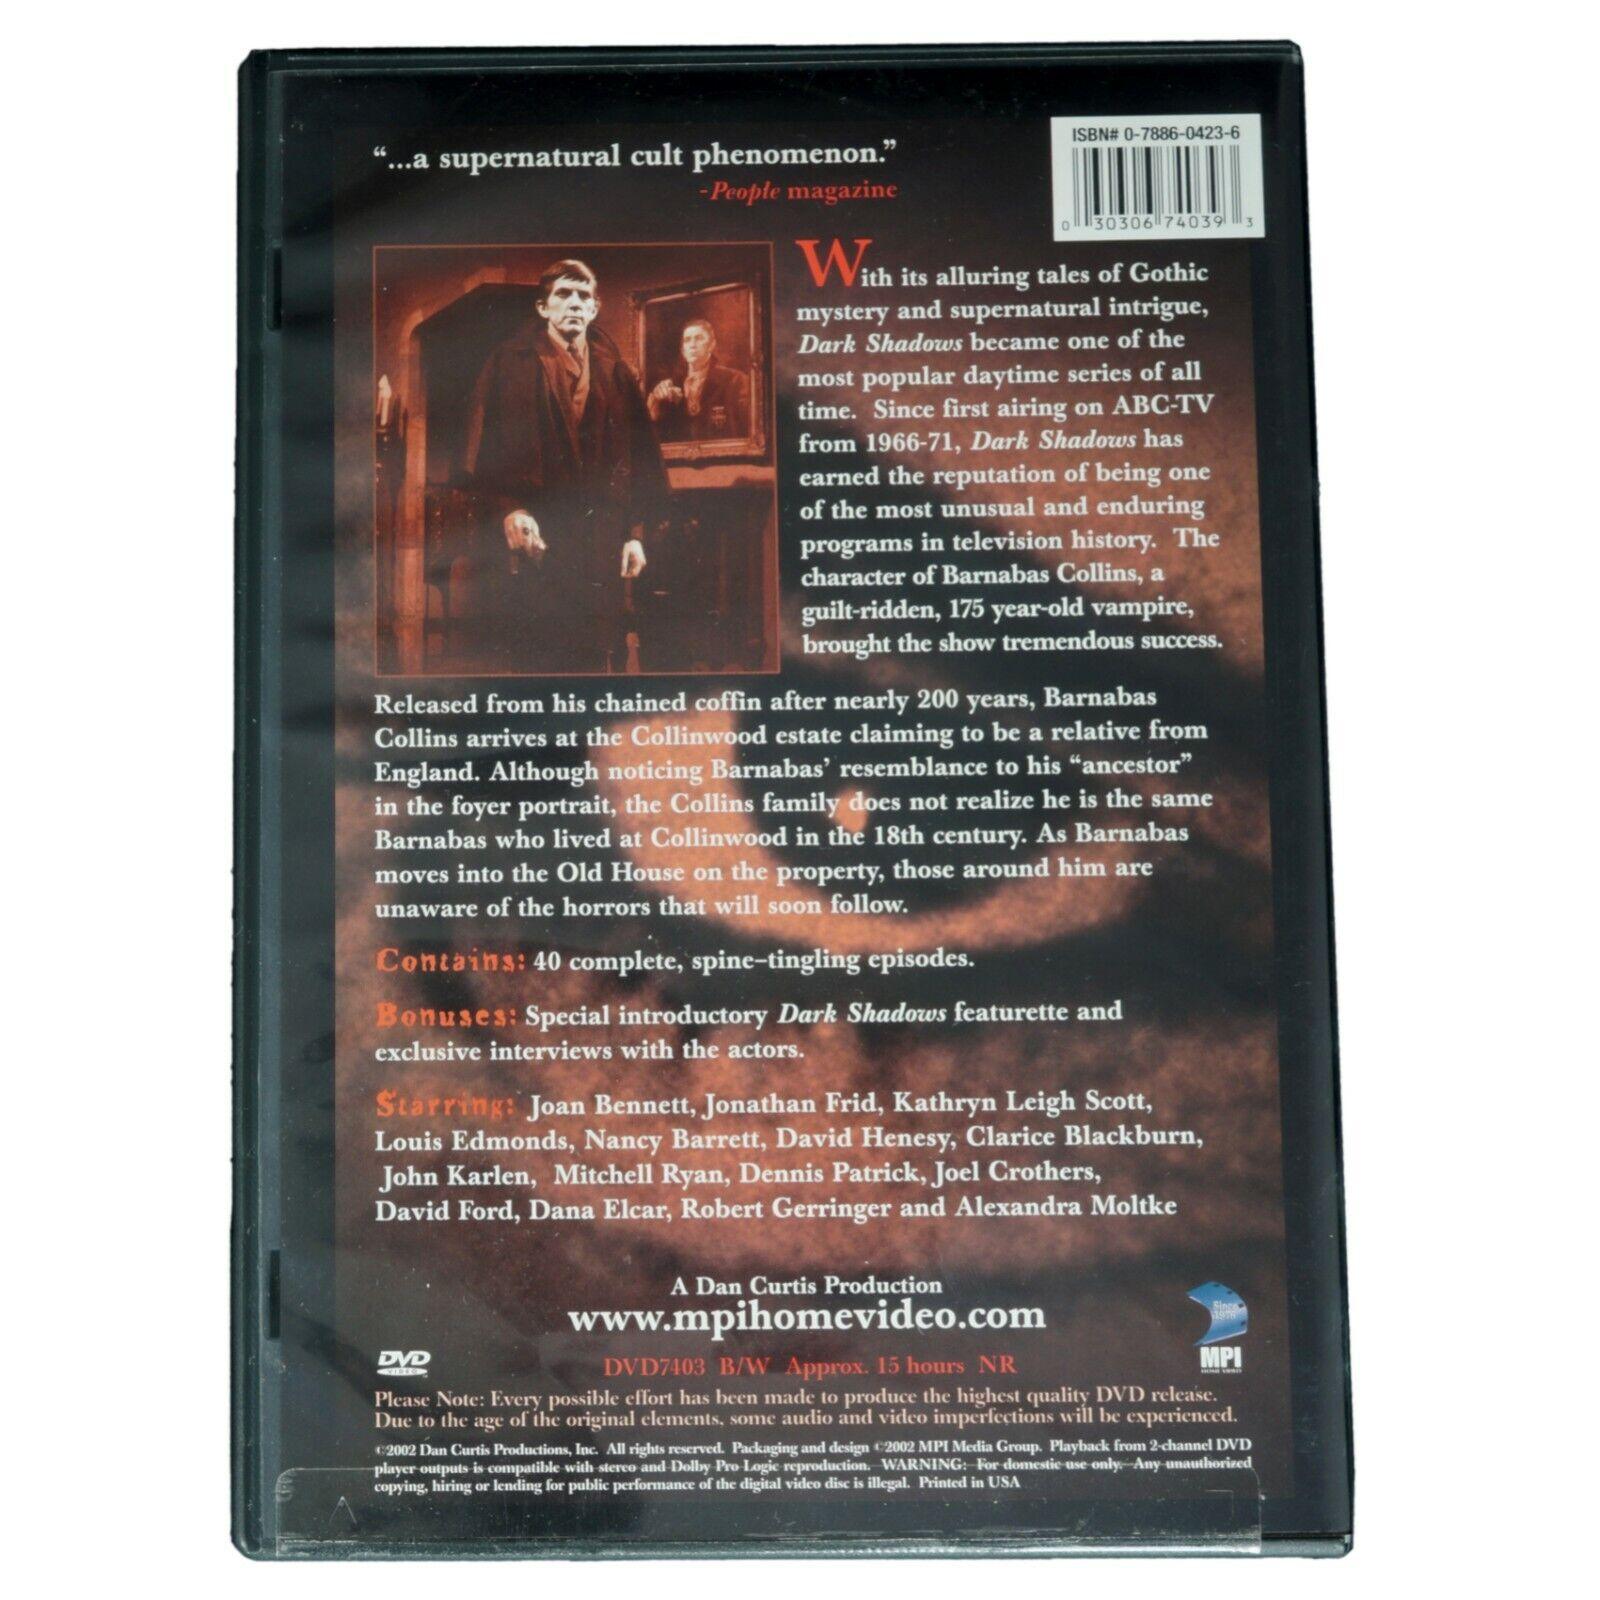 Dark Shadows: DVD Collection 1, 1966-71 (DVD) Horror/Soap Opera. Jonathan  Frid